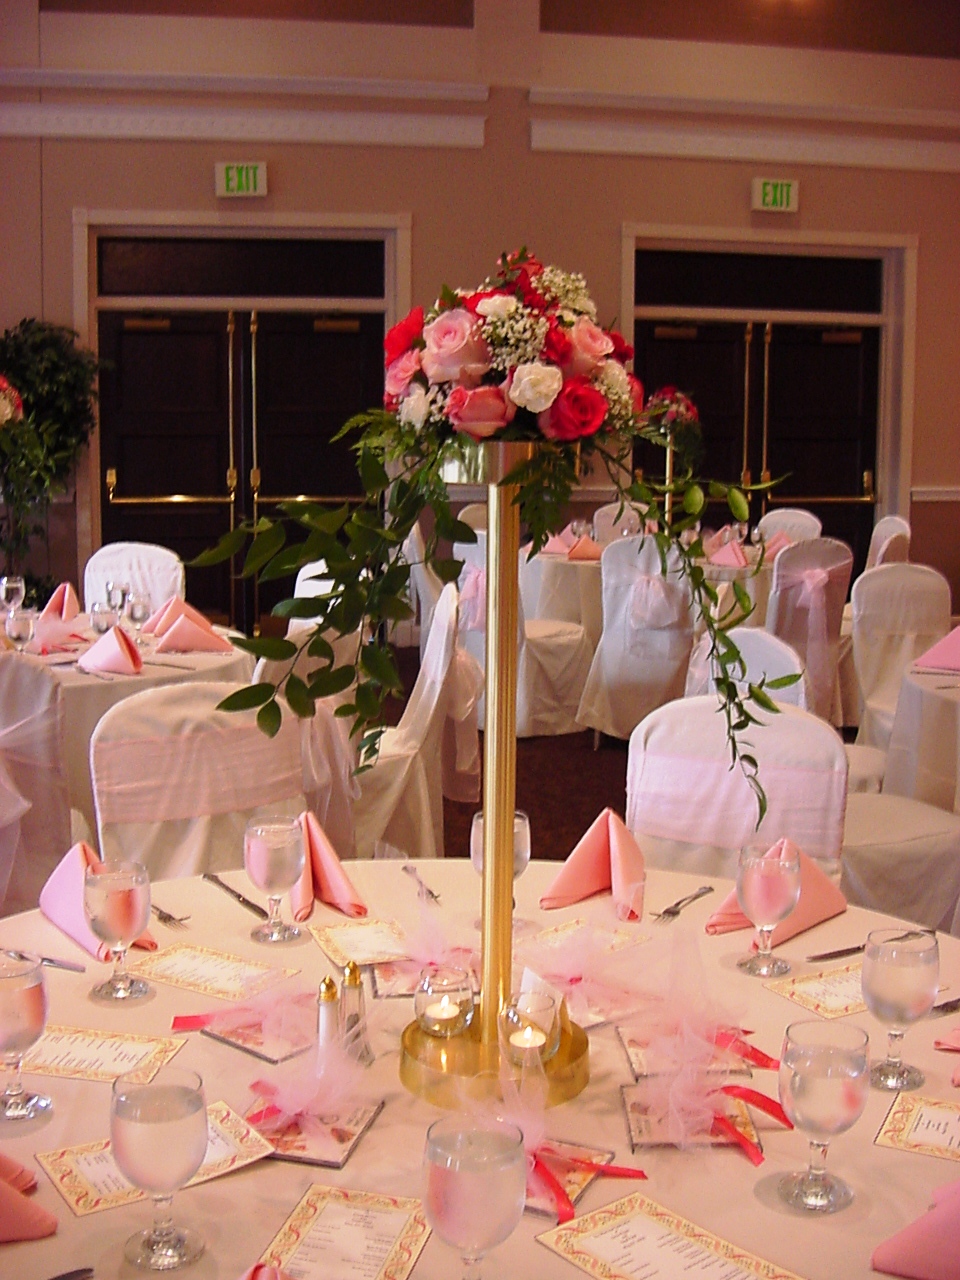 Wedding Reception Centerpieces Decoration Ideas